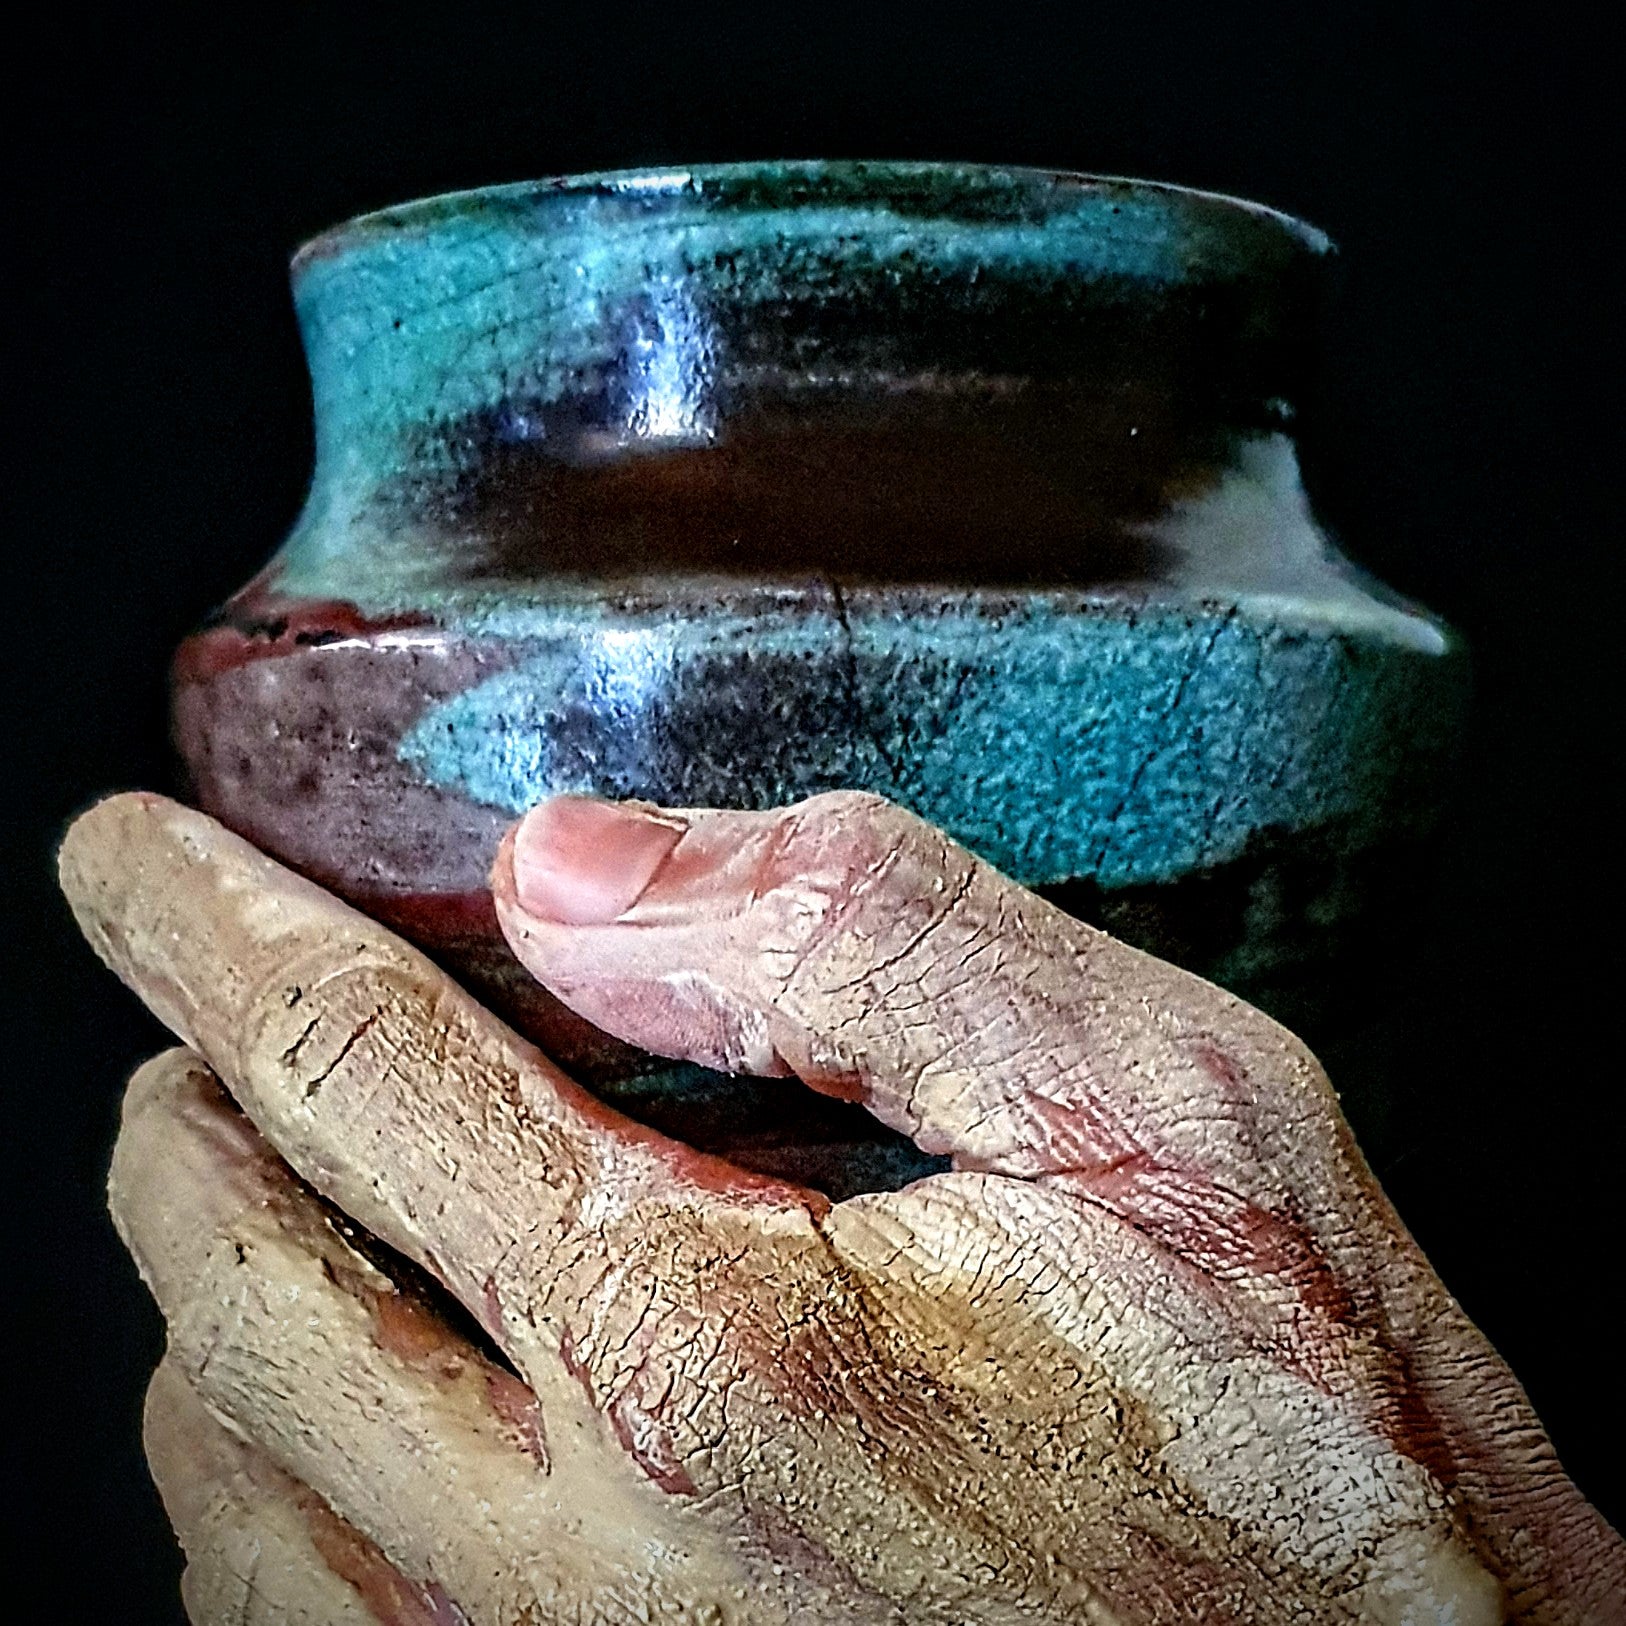 Fine Art Vase | Unique Raku Pottery Vase | Handcrafted Vase | Wabi Sabi Home Décor | Large Ceramic Vase | Decorative Art | Artistic Vase | 8